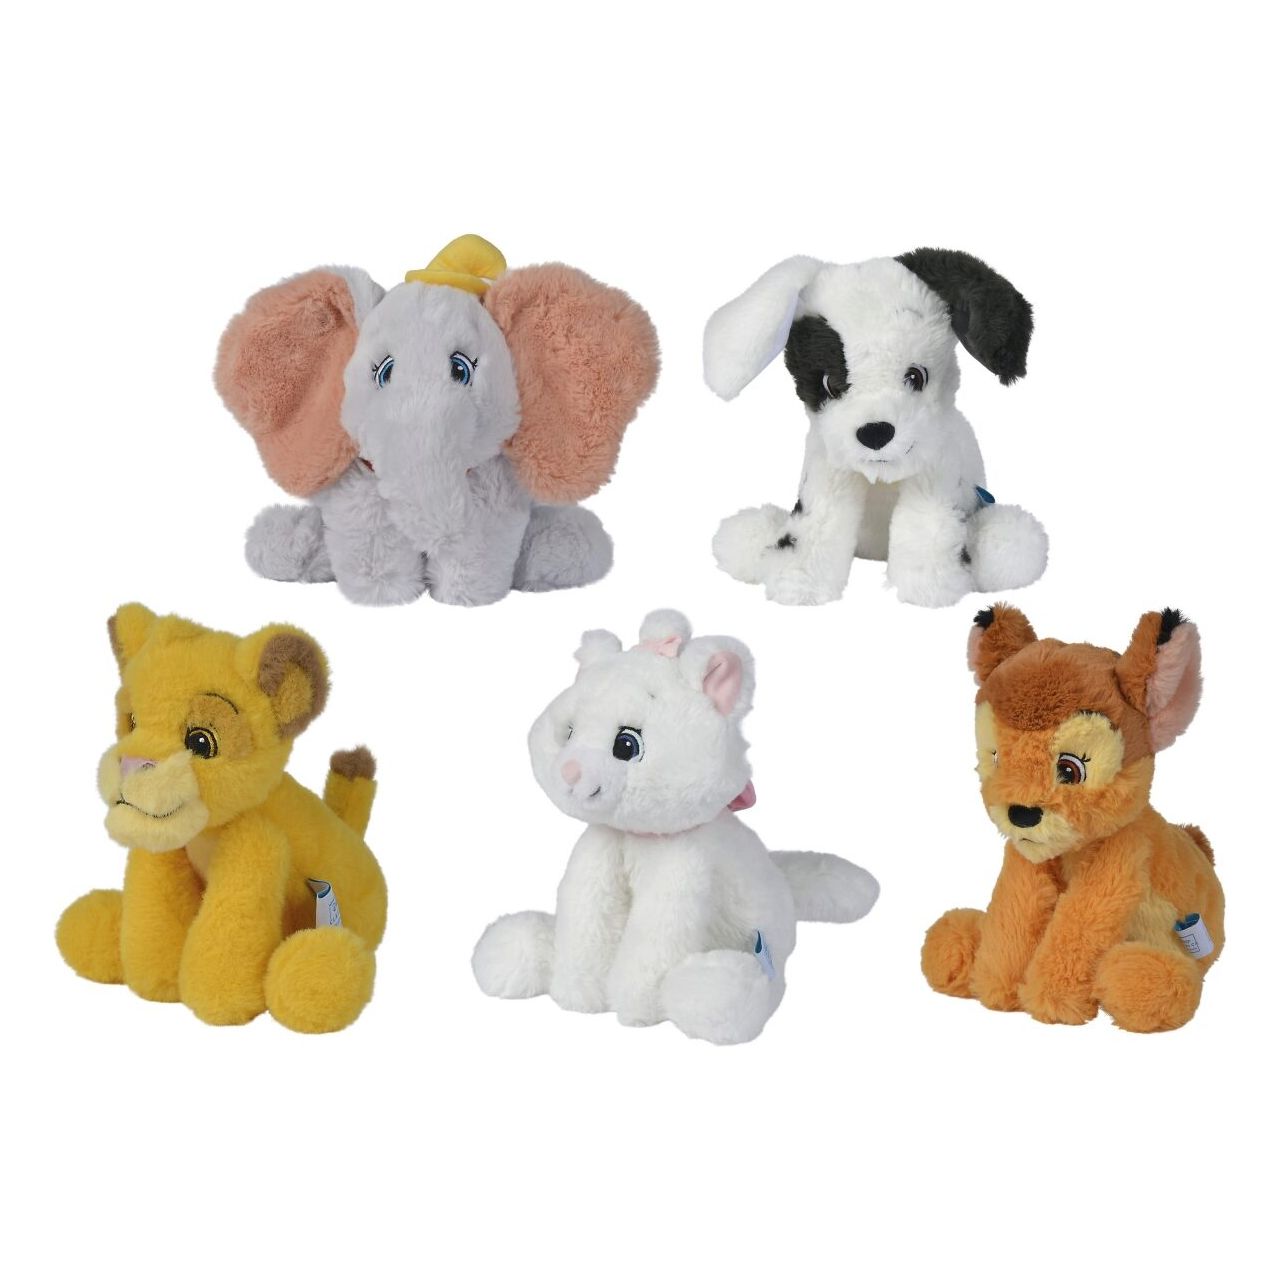 Simba - Disney - Plüsch Dumbo, Marie, Bambi, Dalmatiner oder Simba, 18cm, Kuscheltier